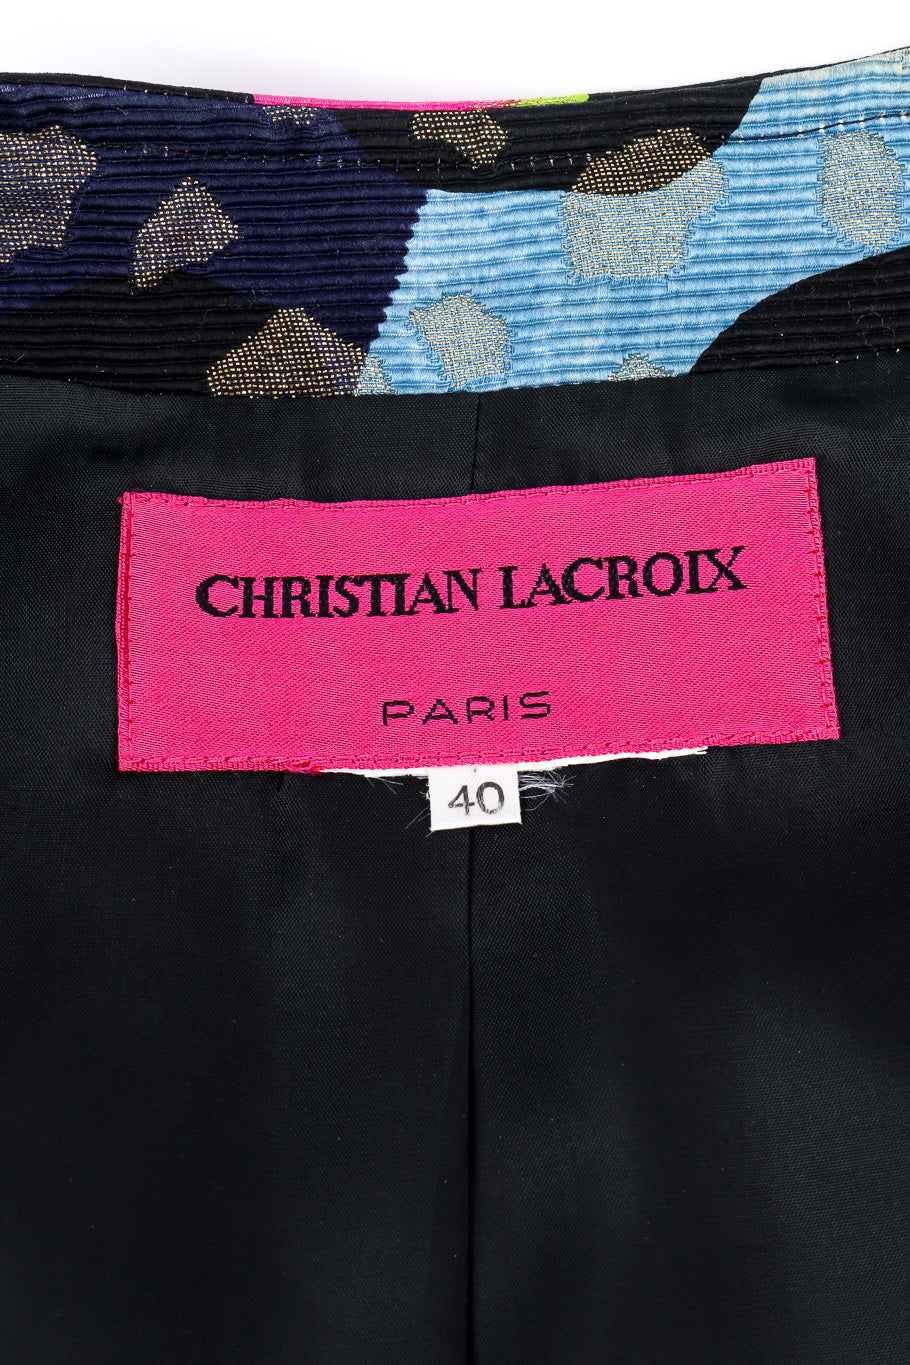 Peplum jacket by Christian LaCroix flat lay label @recessla